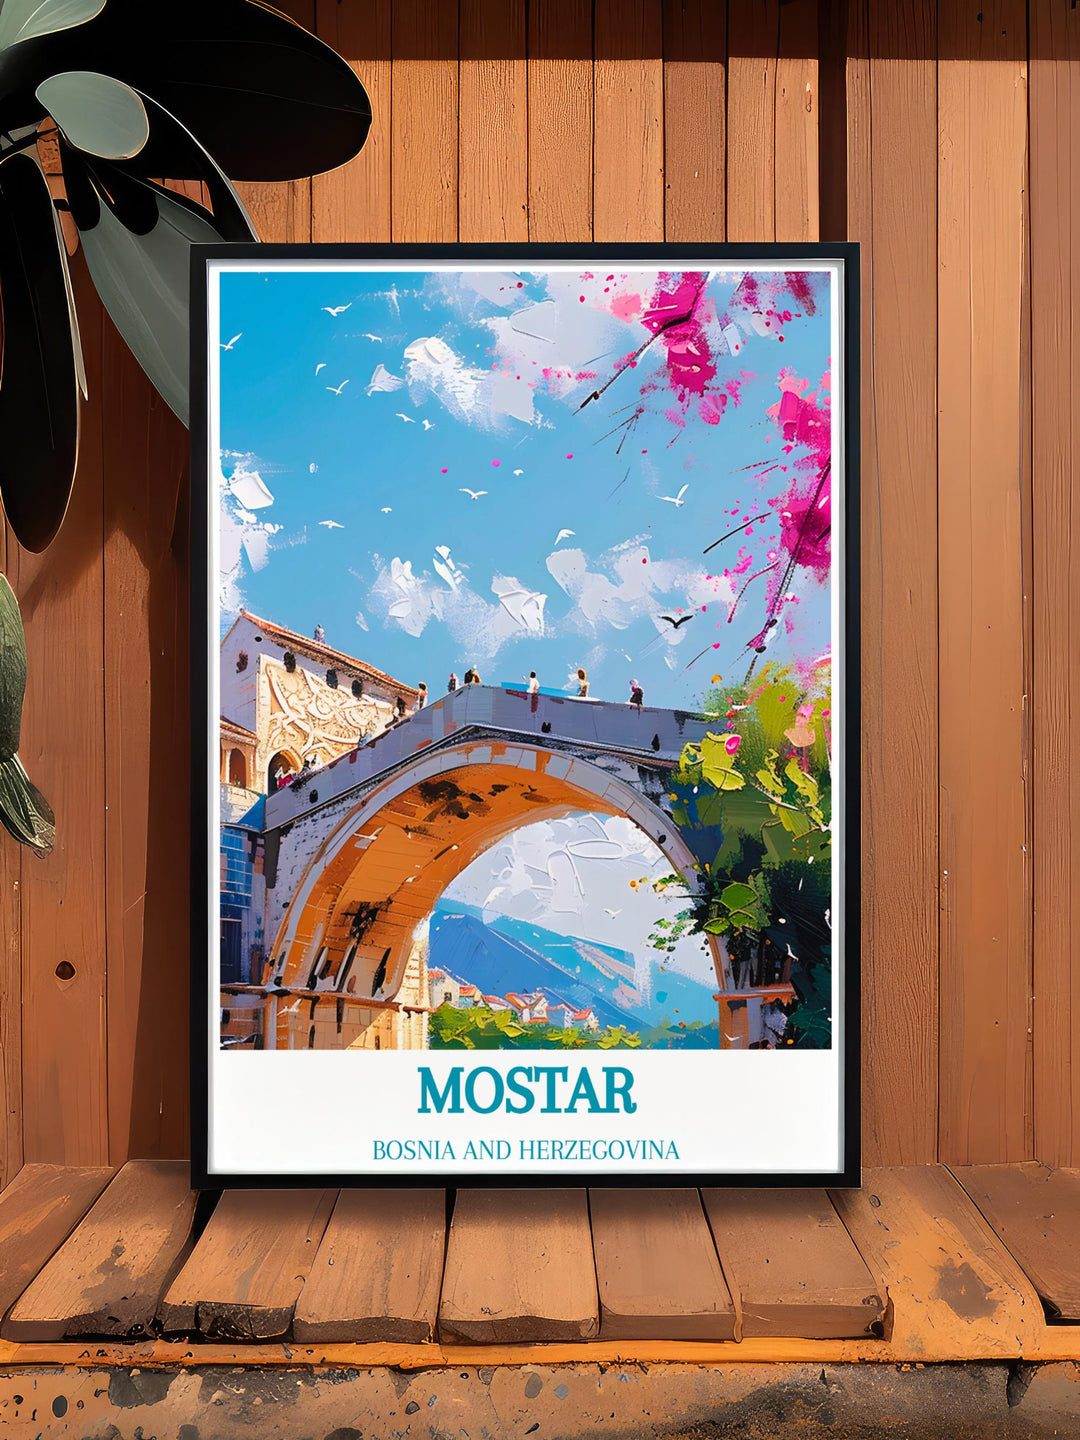 Modern wall decor depicting Mostars vibrant street life and cultural diversity, bringing Bosnian urban culture to life.